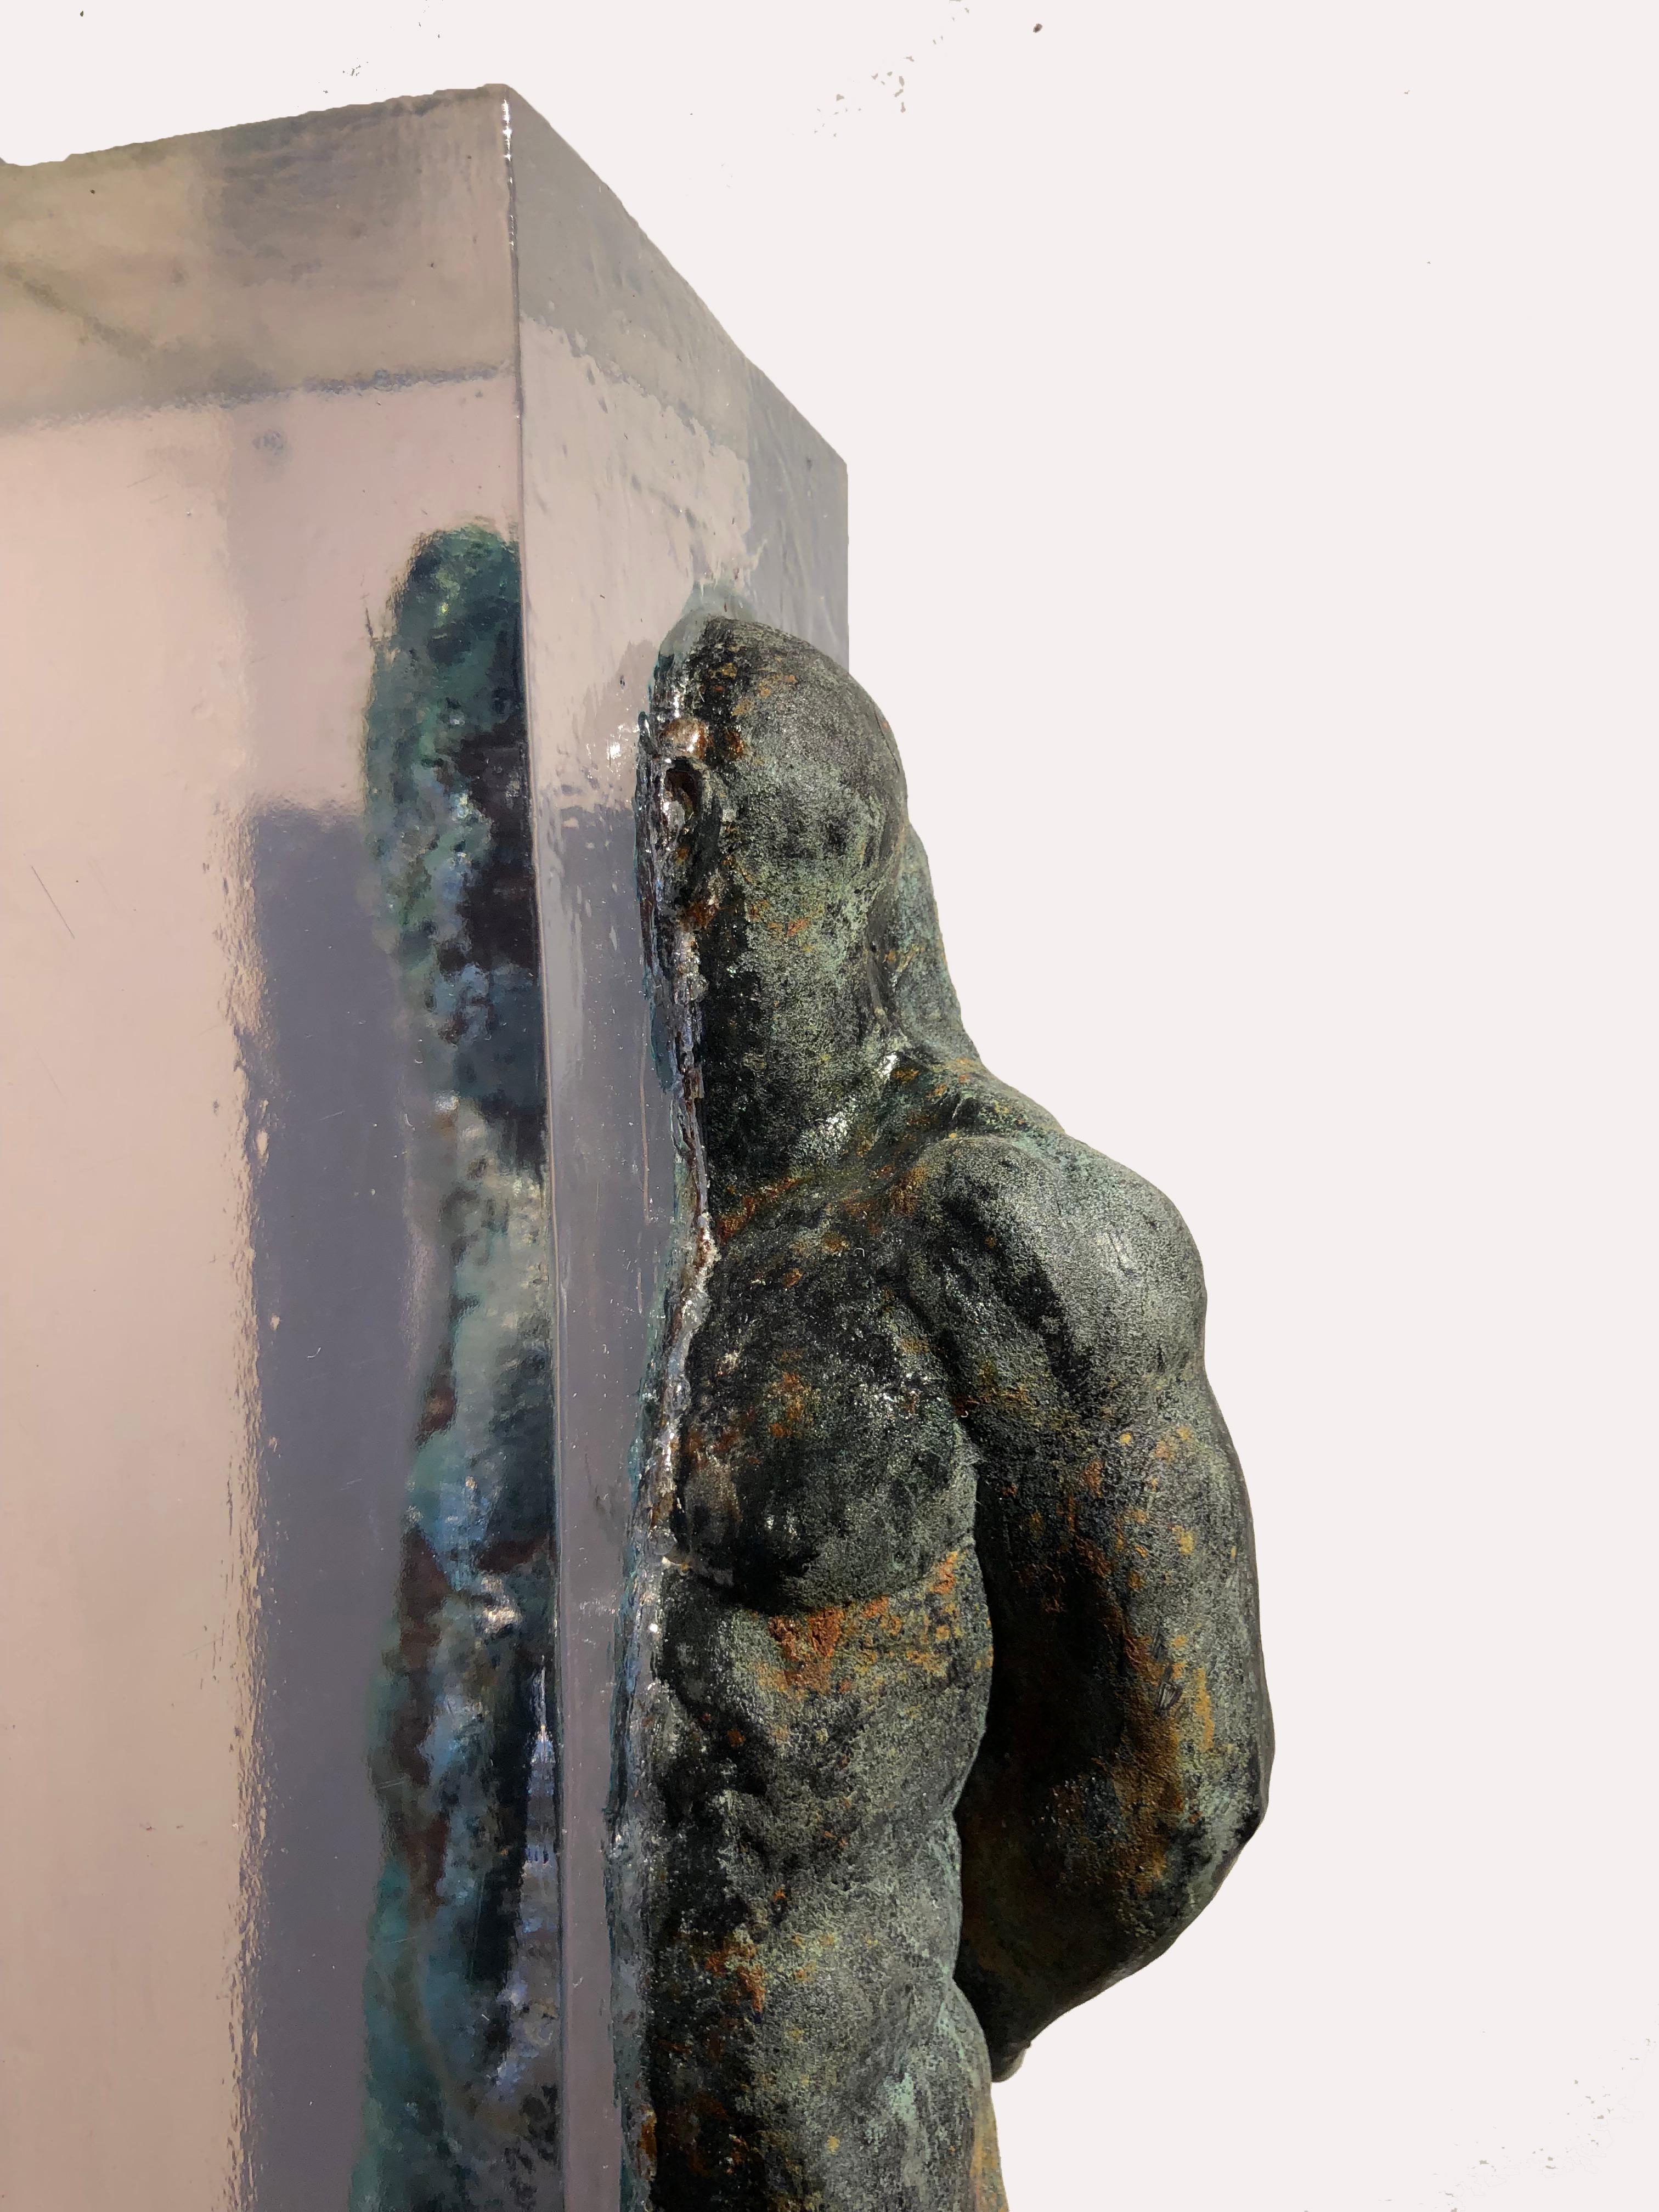 Embedded Slave - After Michelangelo, Sculpture Half Embedded in Clear Resin - Gold Nude Sculpture by Dean Kugler